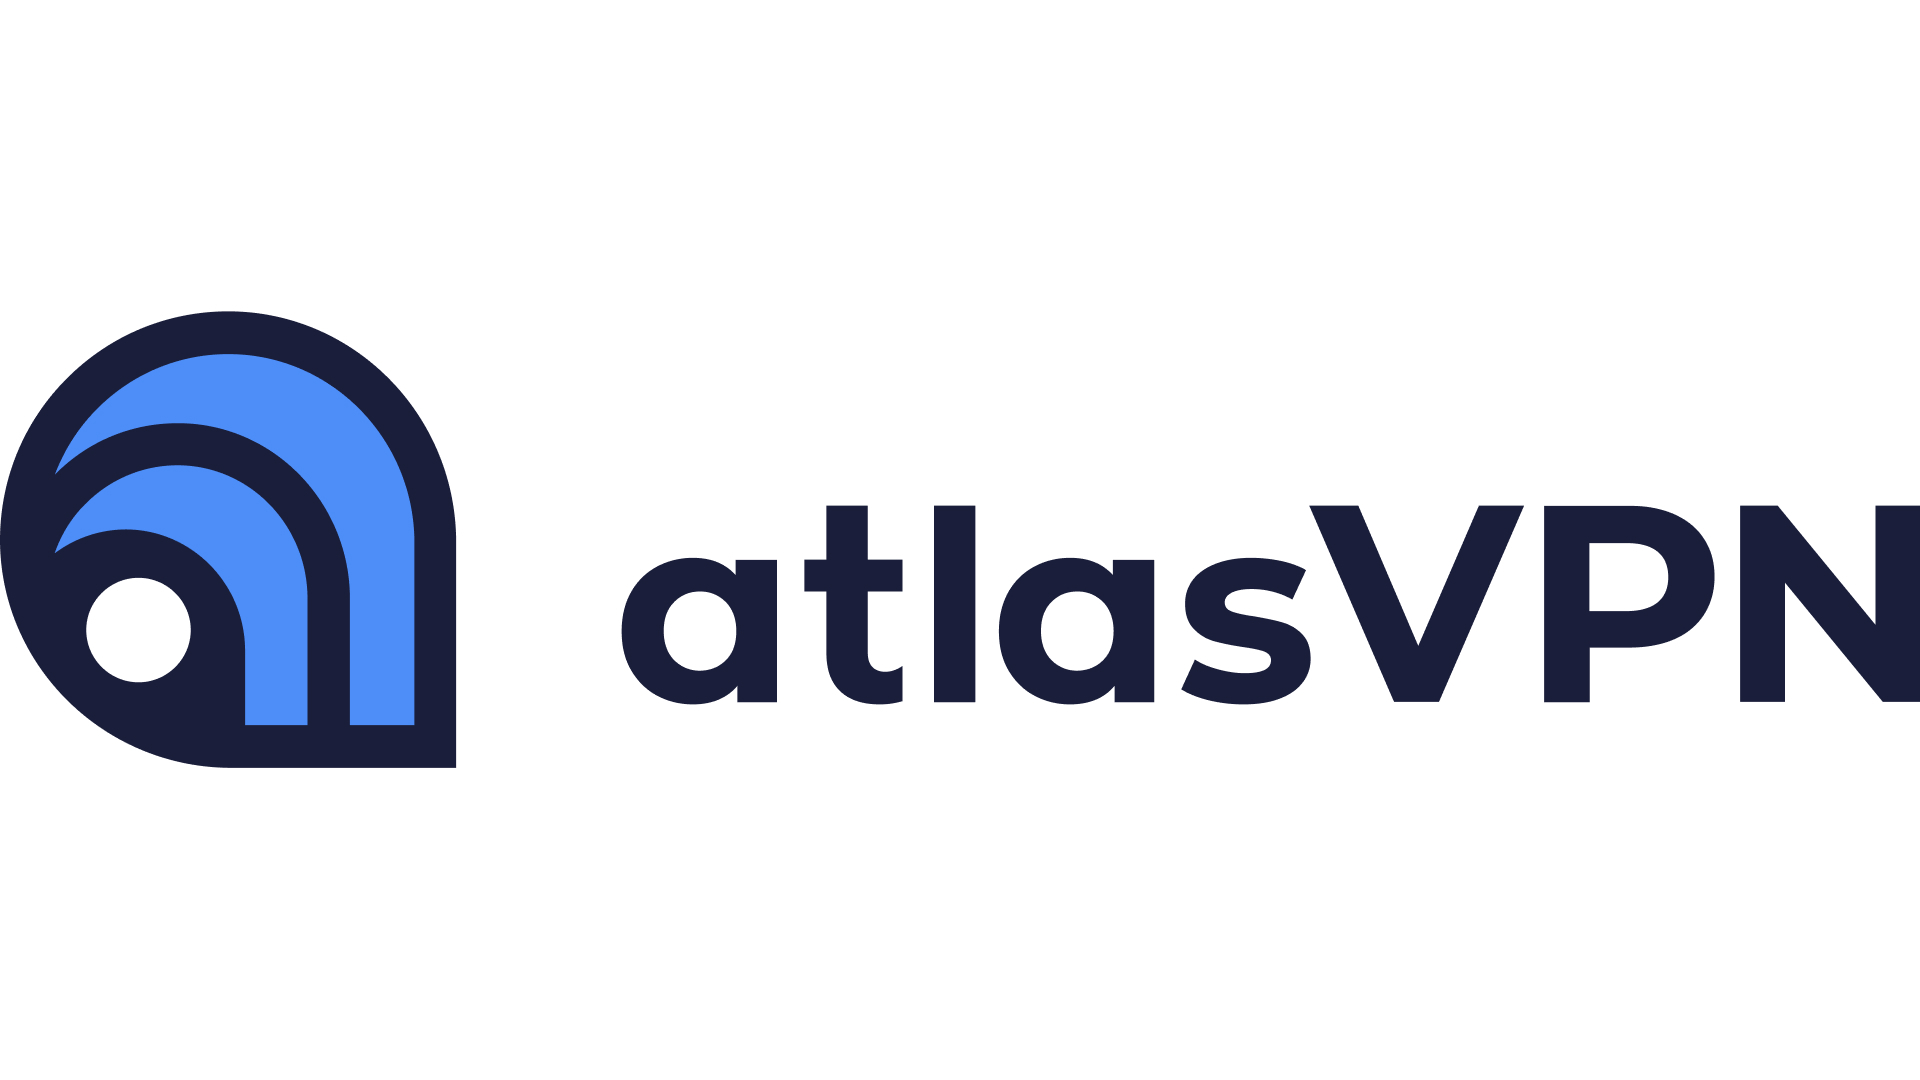 Best YouTube VPN: AtlasVPN, its logo on a white background.